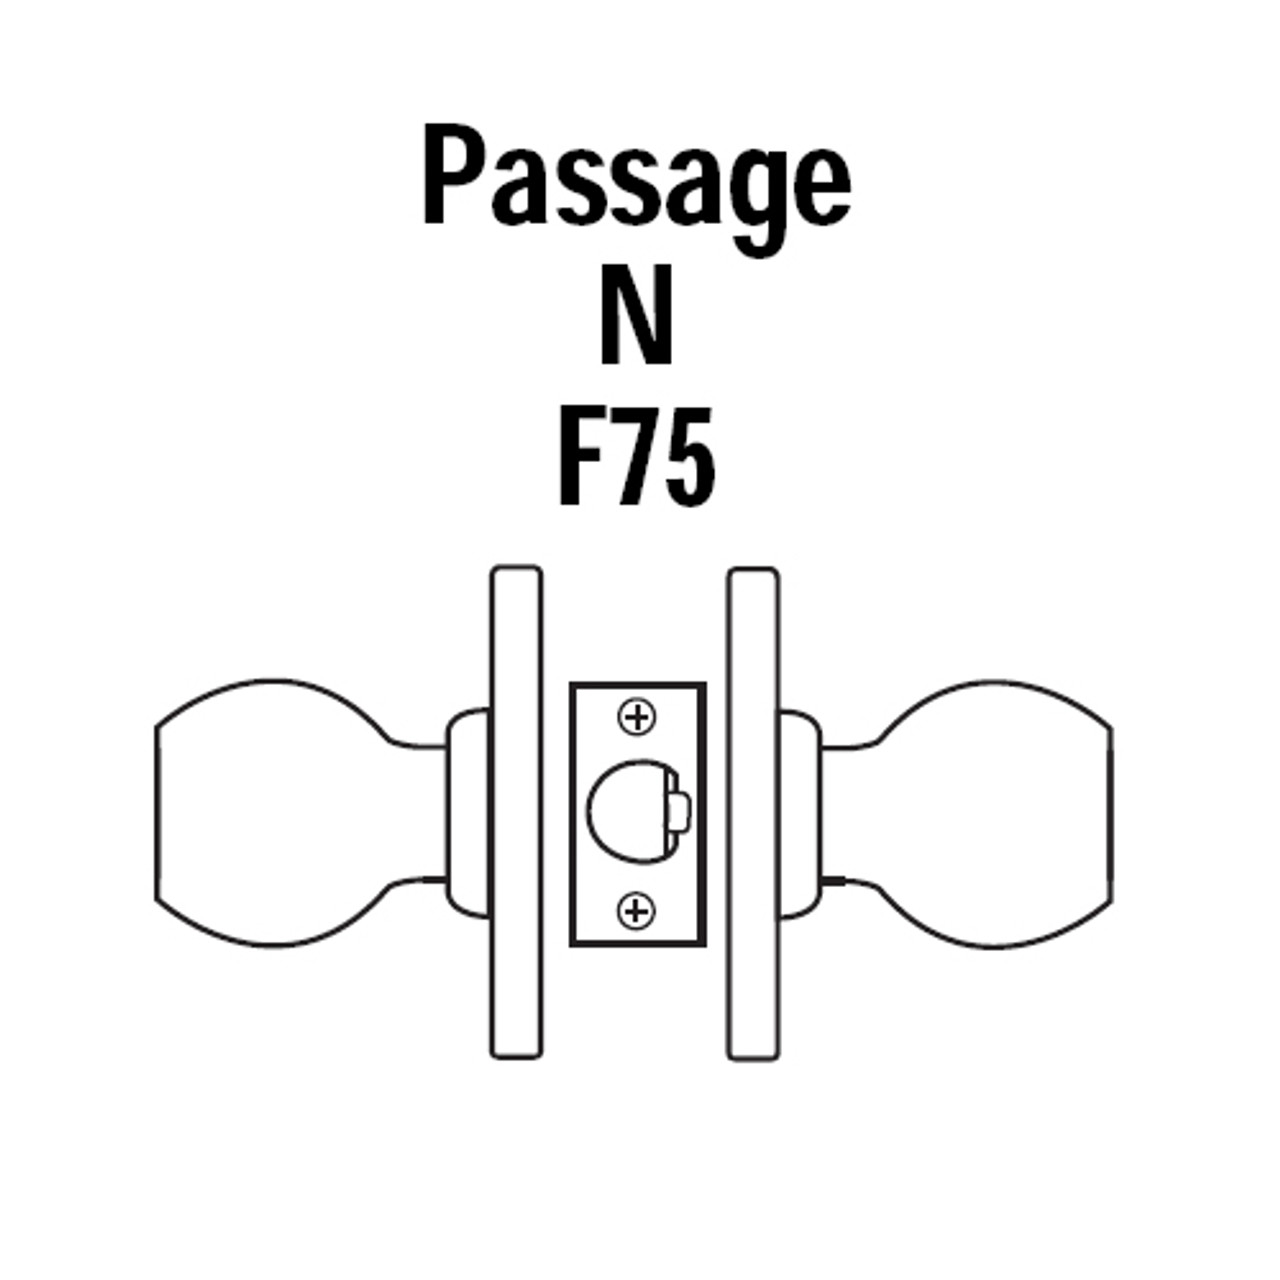 8K30N4DS3612 Best 8K Series Passage Heavy Duty Cylindrical Knob Locks with Round Style in Satin Bronze